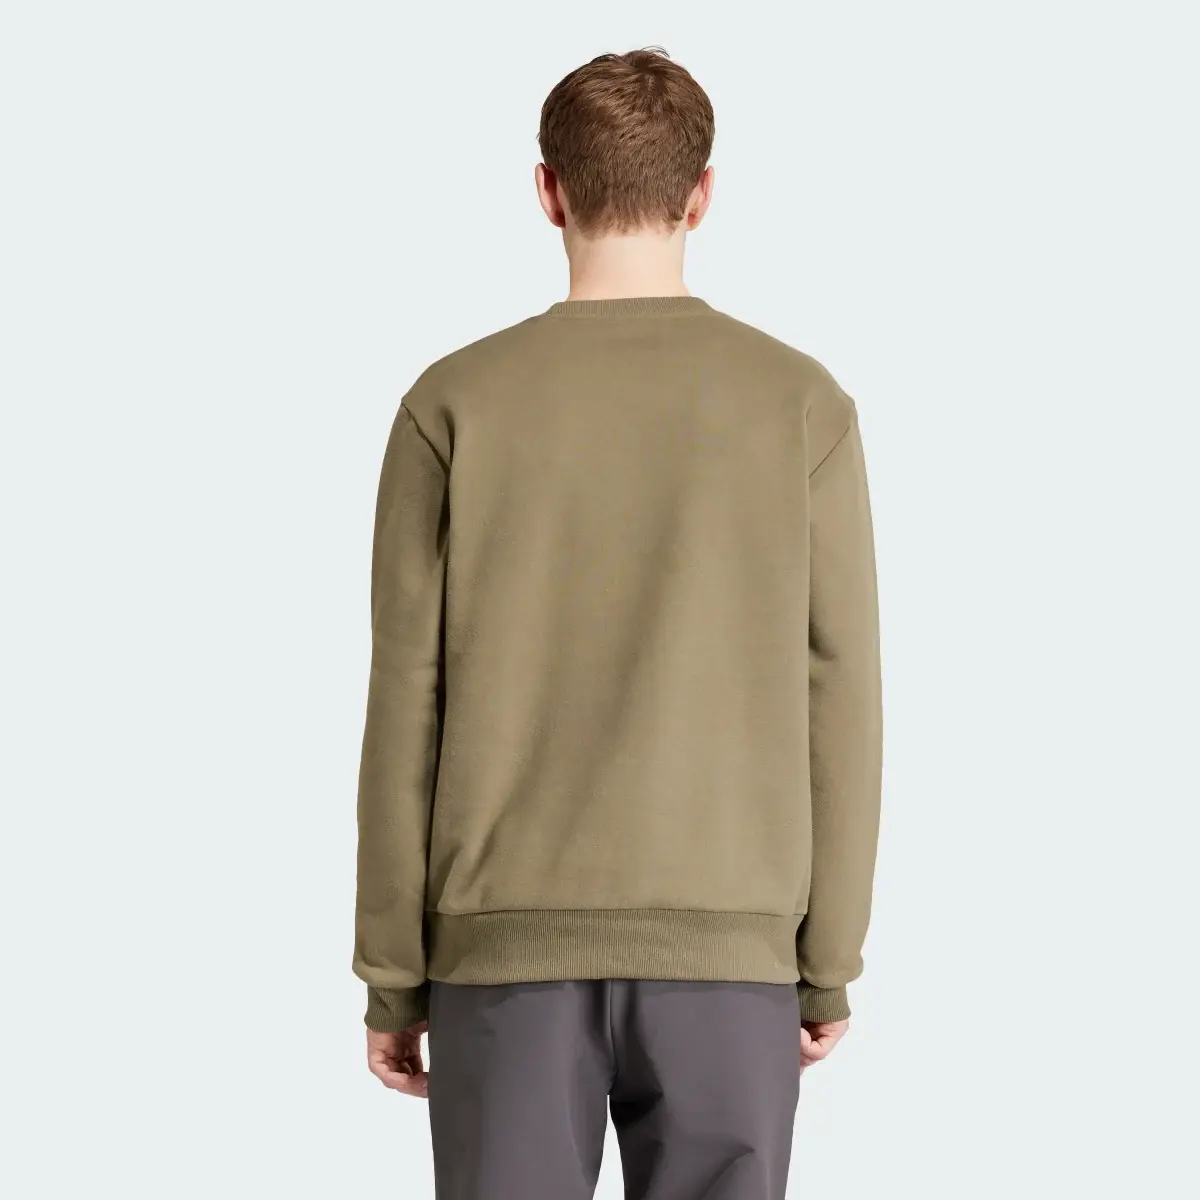 Adidas Mod Trefoil Sweatshirt. 3